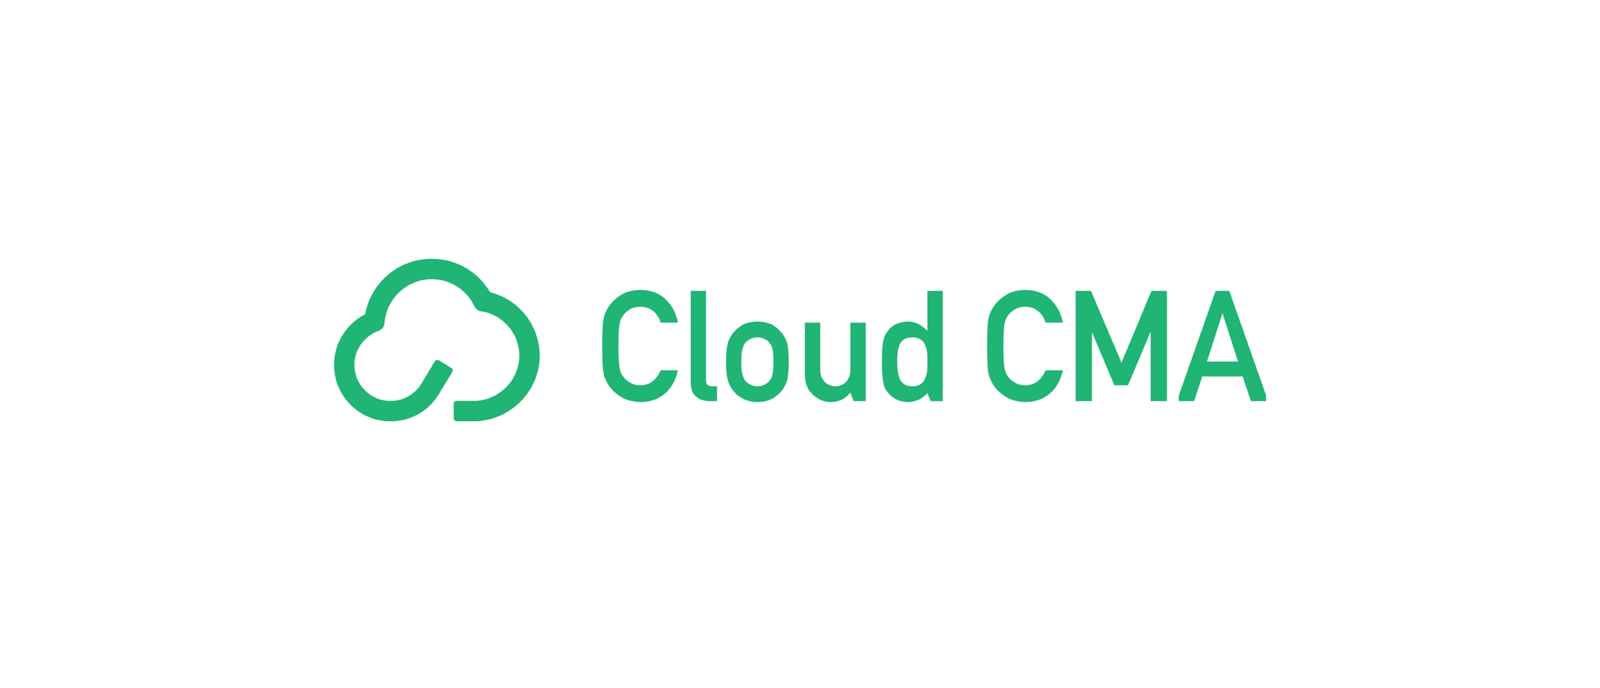 new cloud cma logo 1600x688